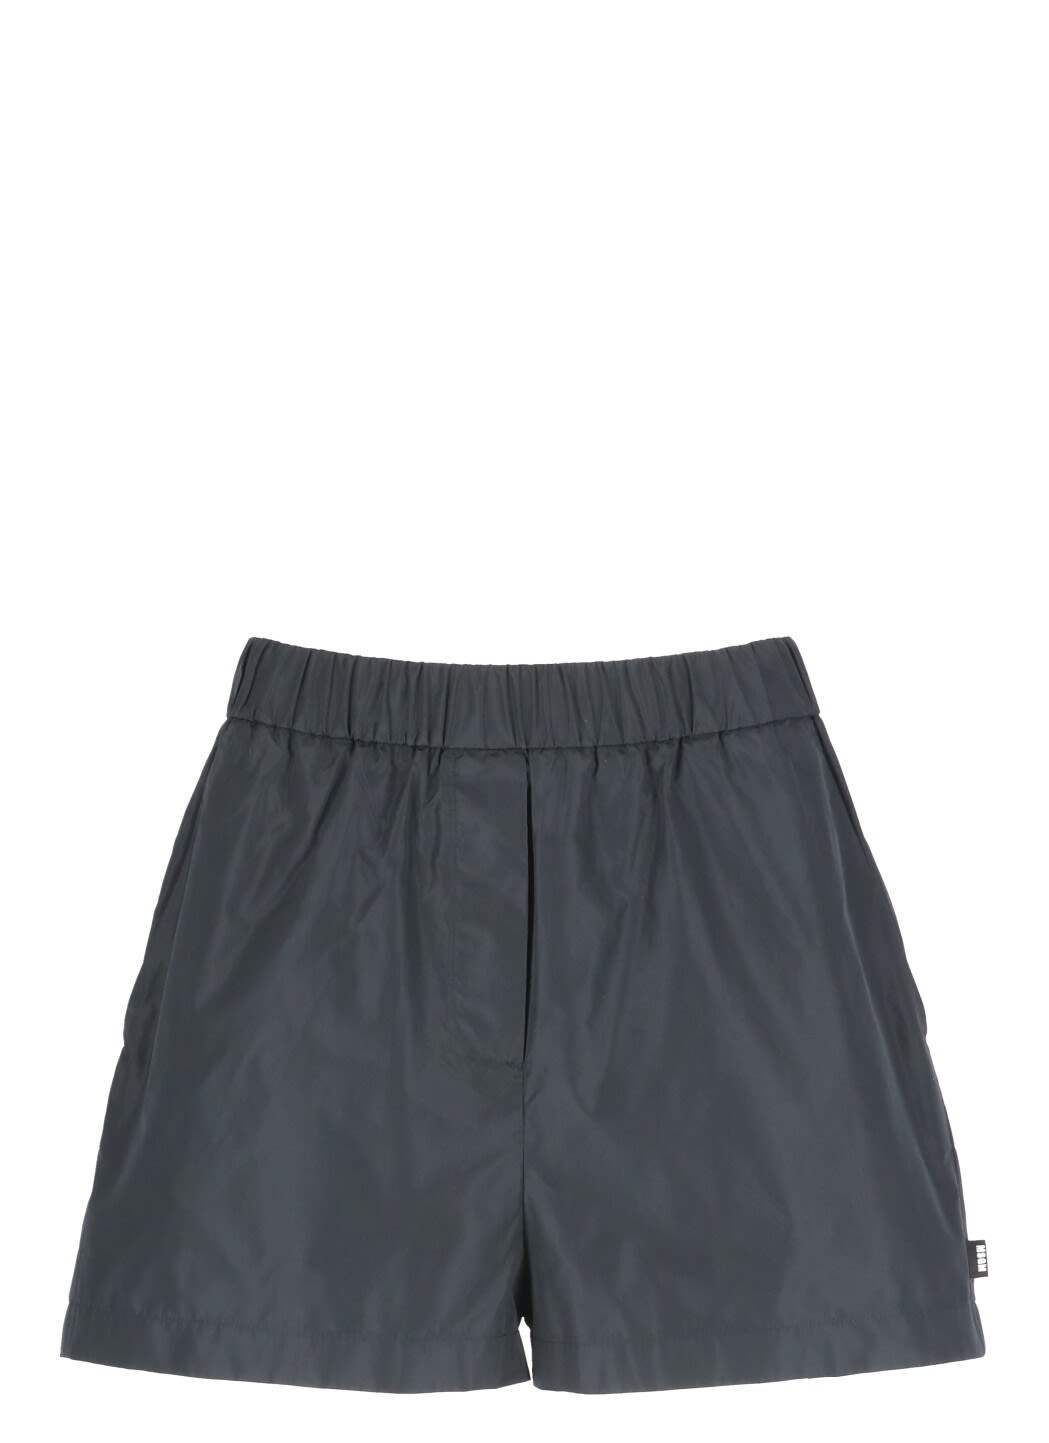 Msgm Fabric Shorts In Black